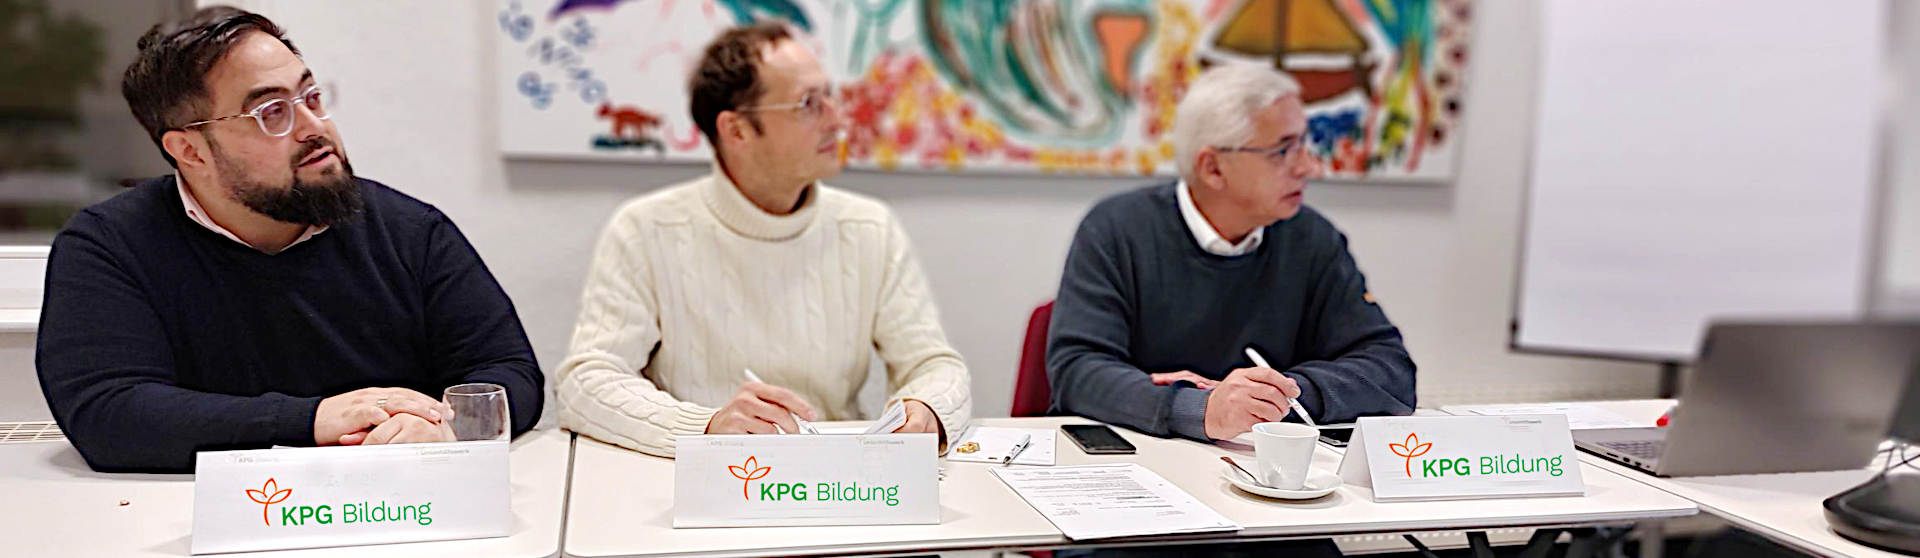 Drei Teilnehmer an einem KPG-Bildungskurs